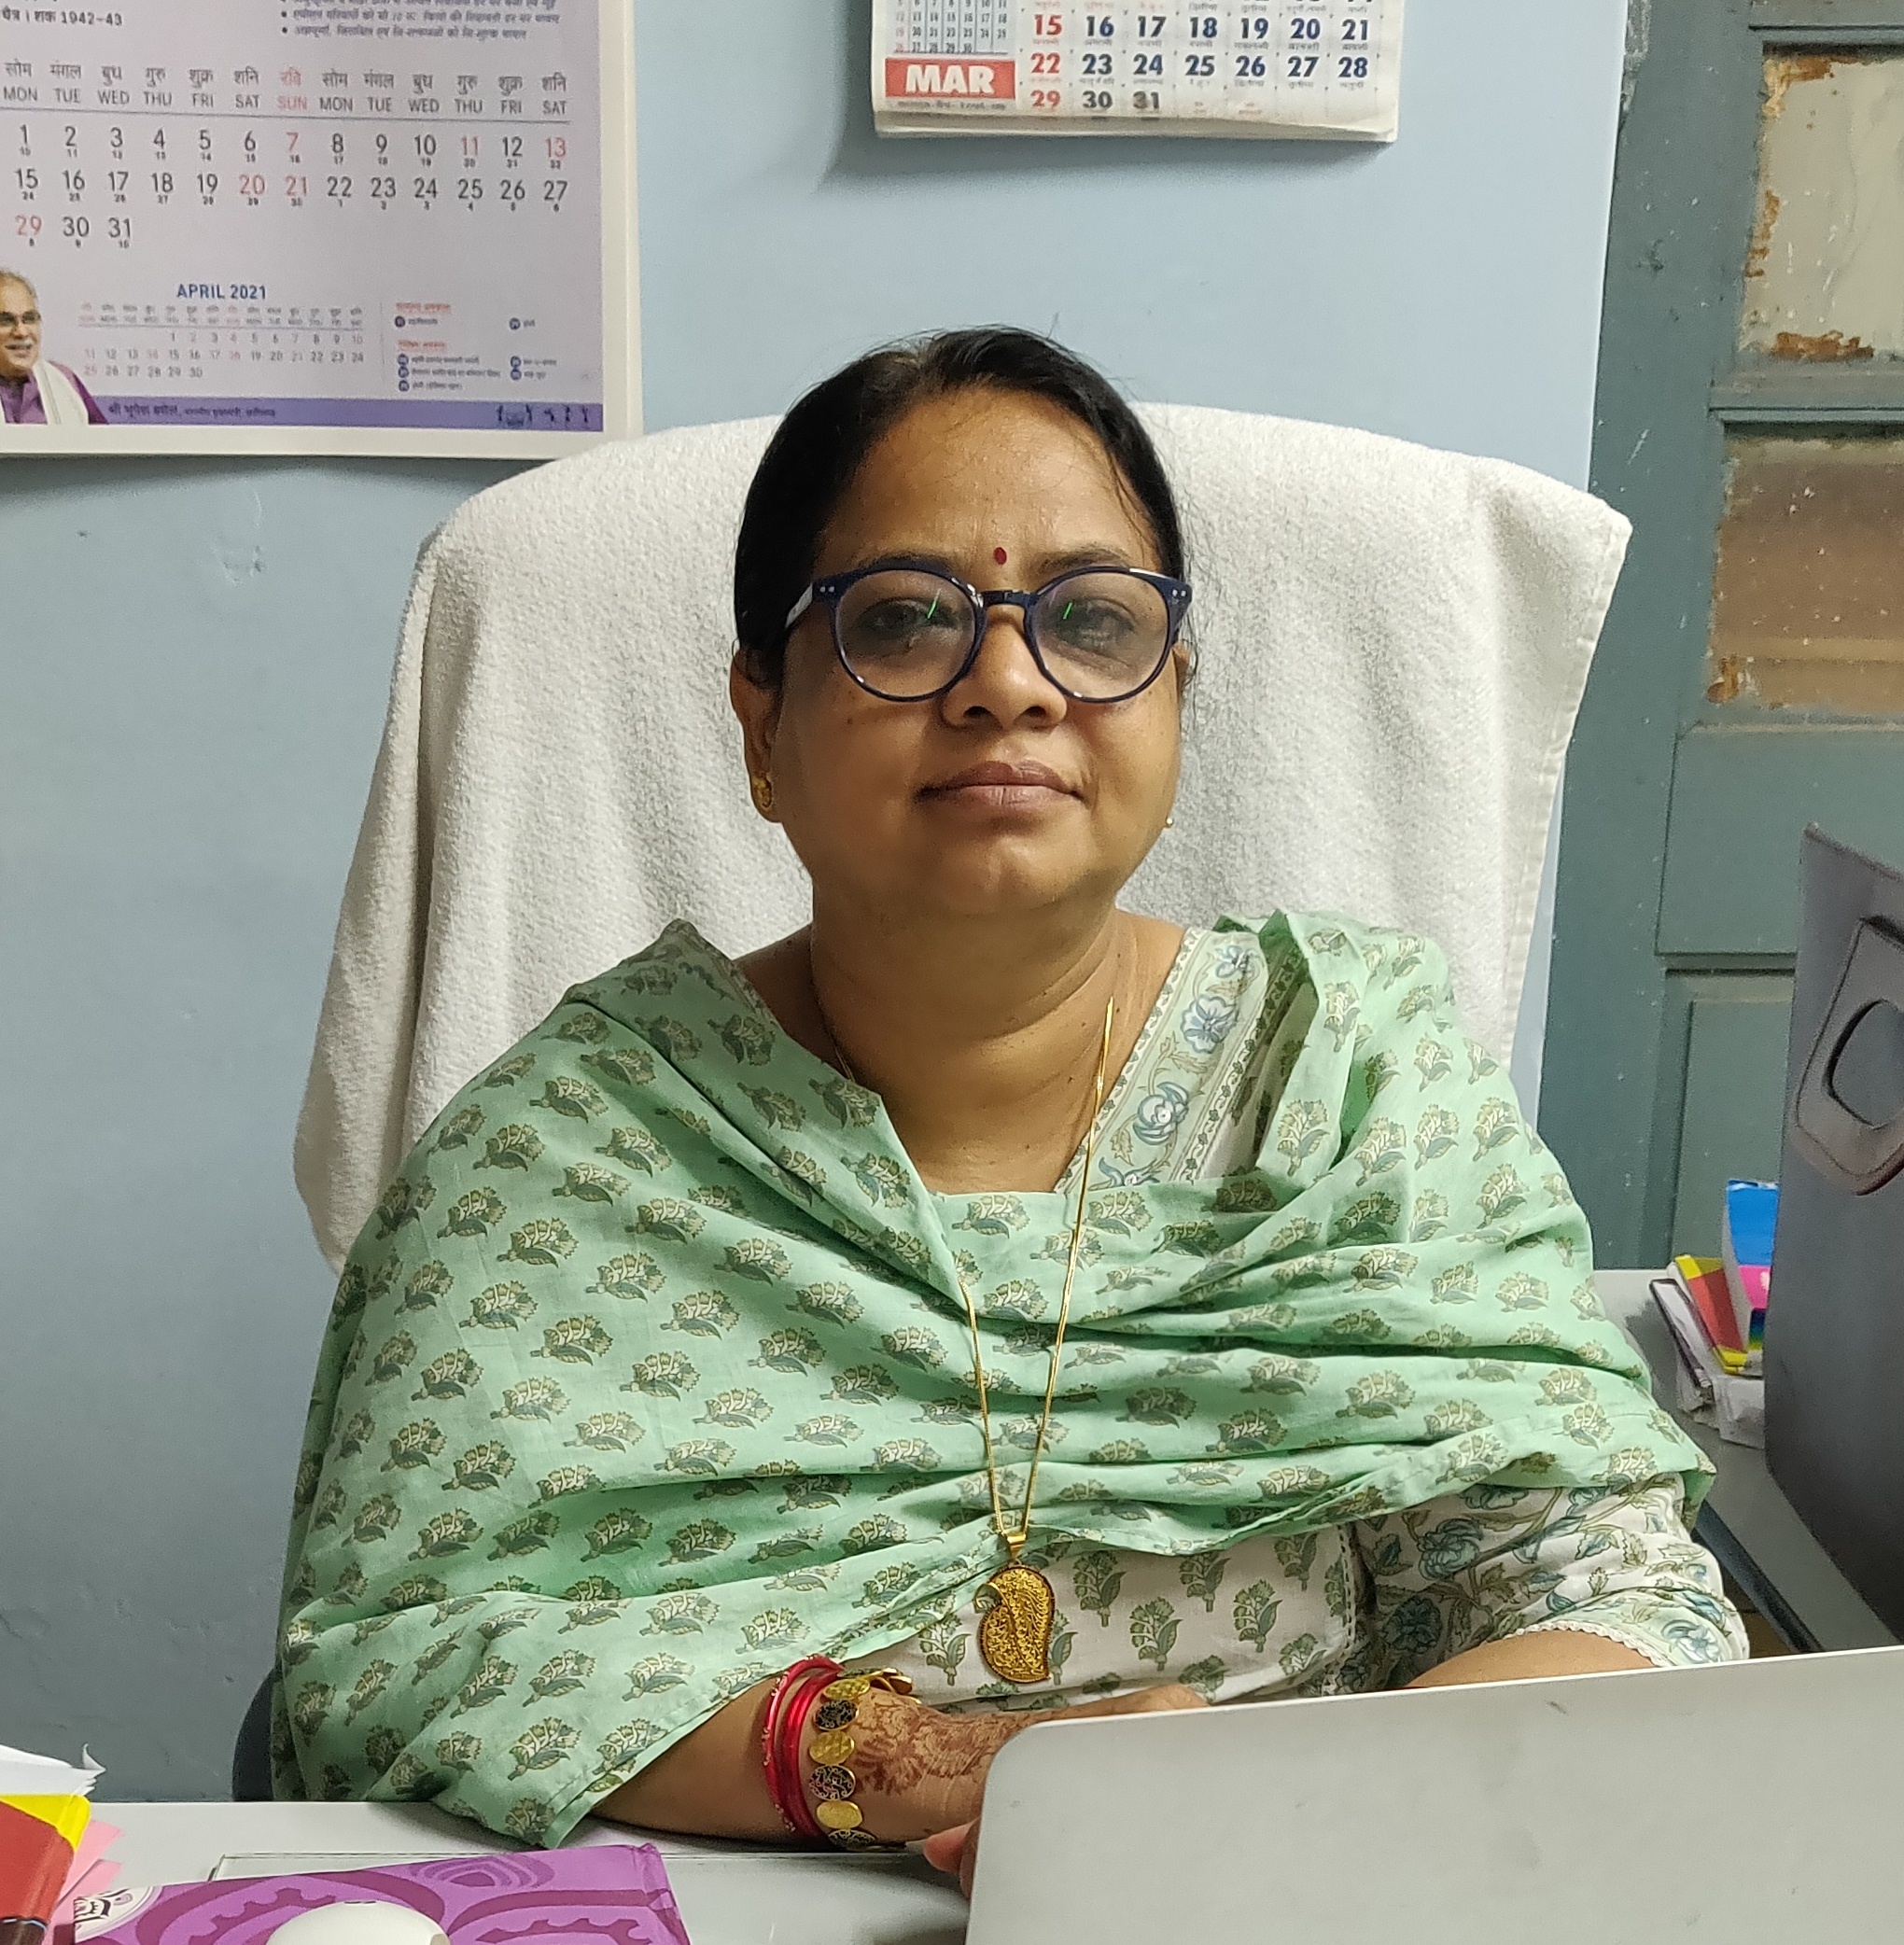 Dr. Mamta Patel